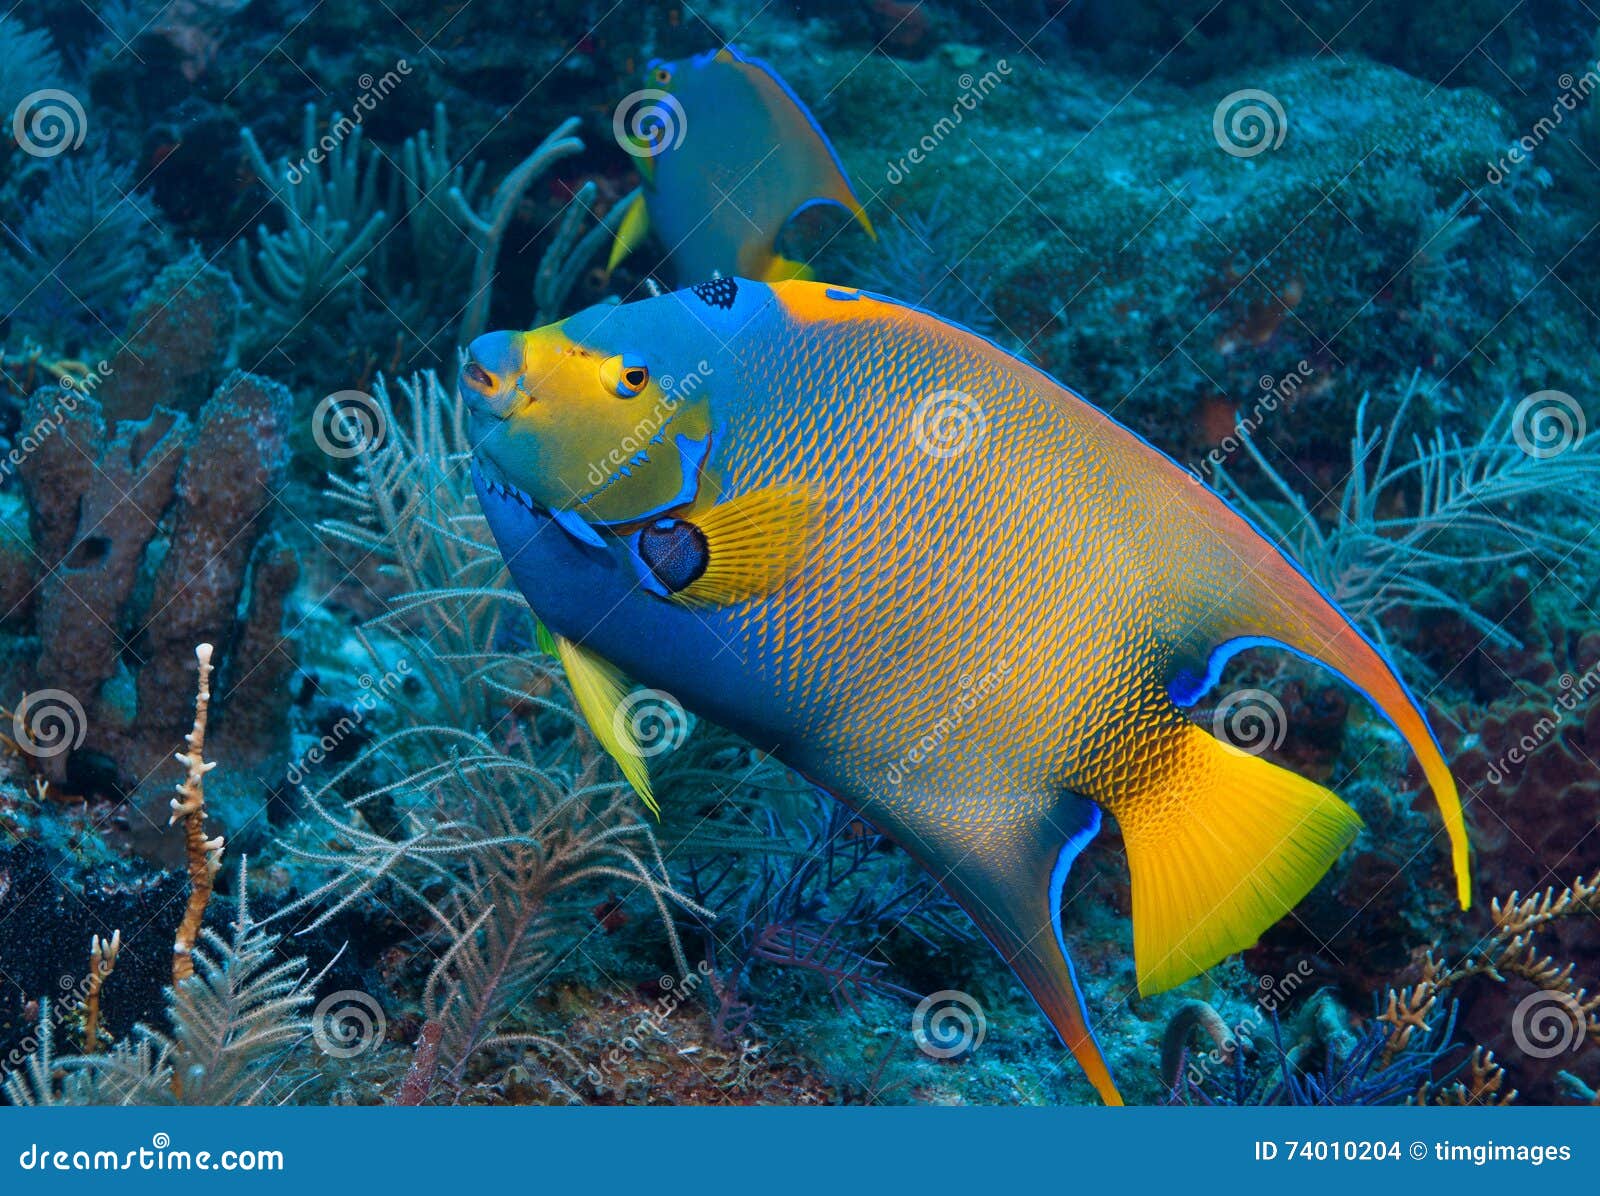 queen angelfish on molasses reef, key largo, florida keys